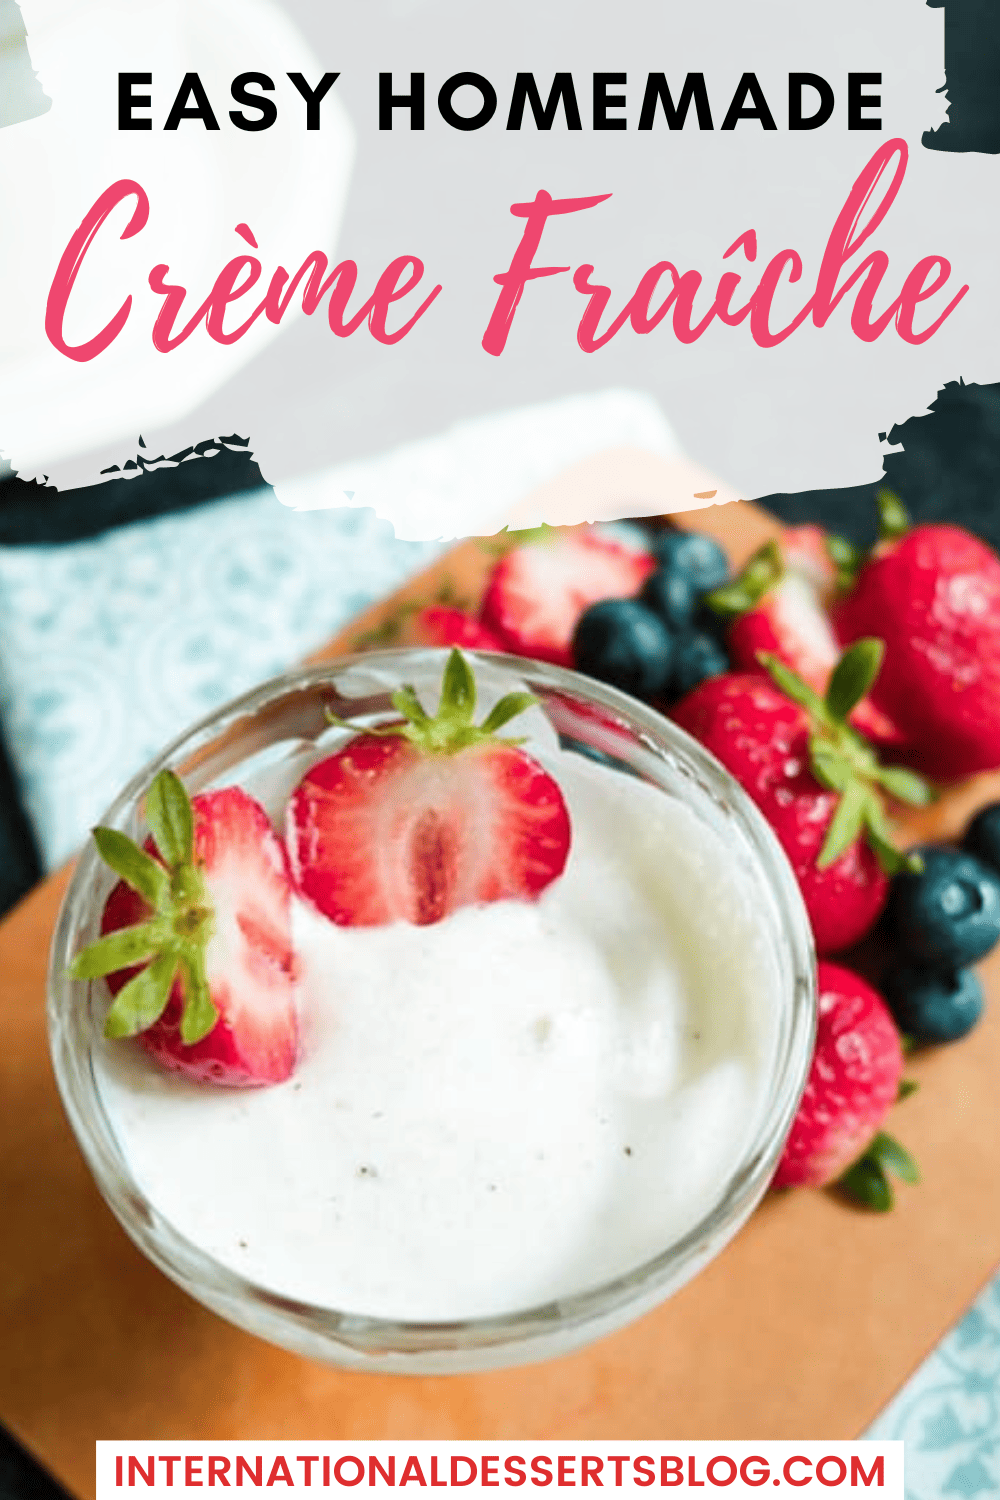 How To Make Crème Fraîche: It's So Easy